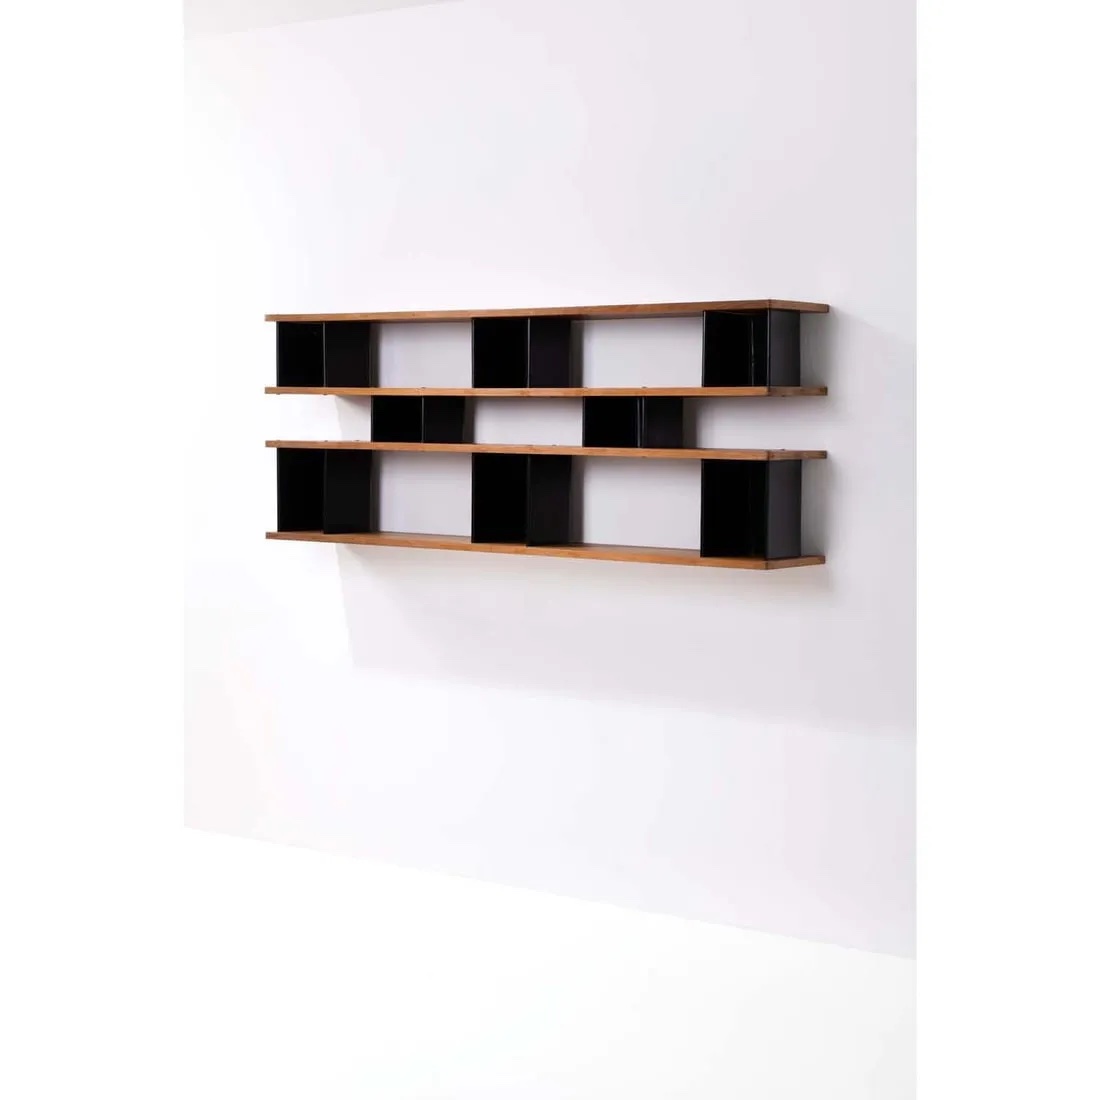 Charlotte Perriand, ‘Nuage’ wall-mounted bookshelf, estimated at €60,000-€90,000 ($65,320-$97,980) at Piasa.